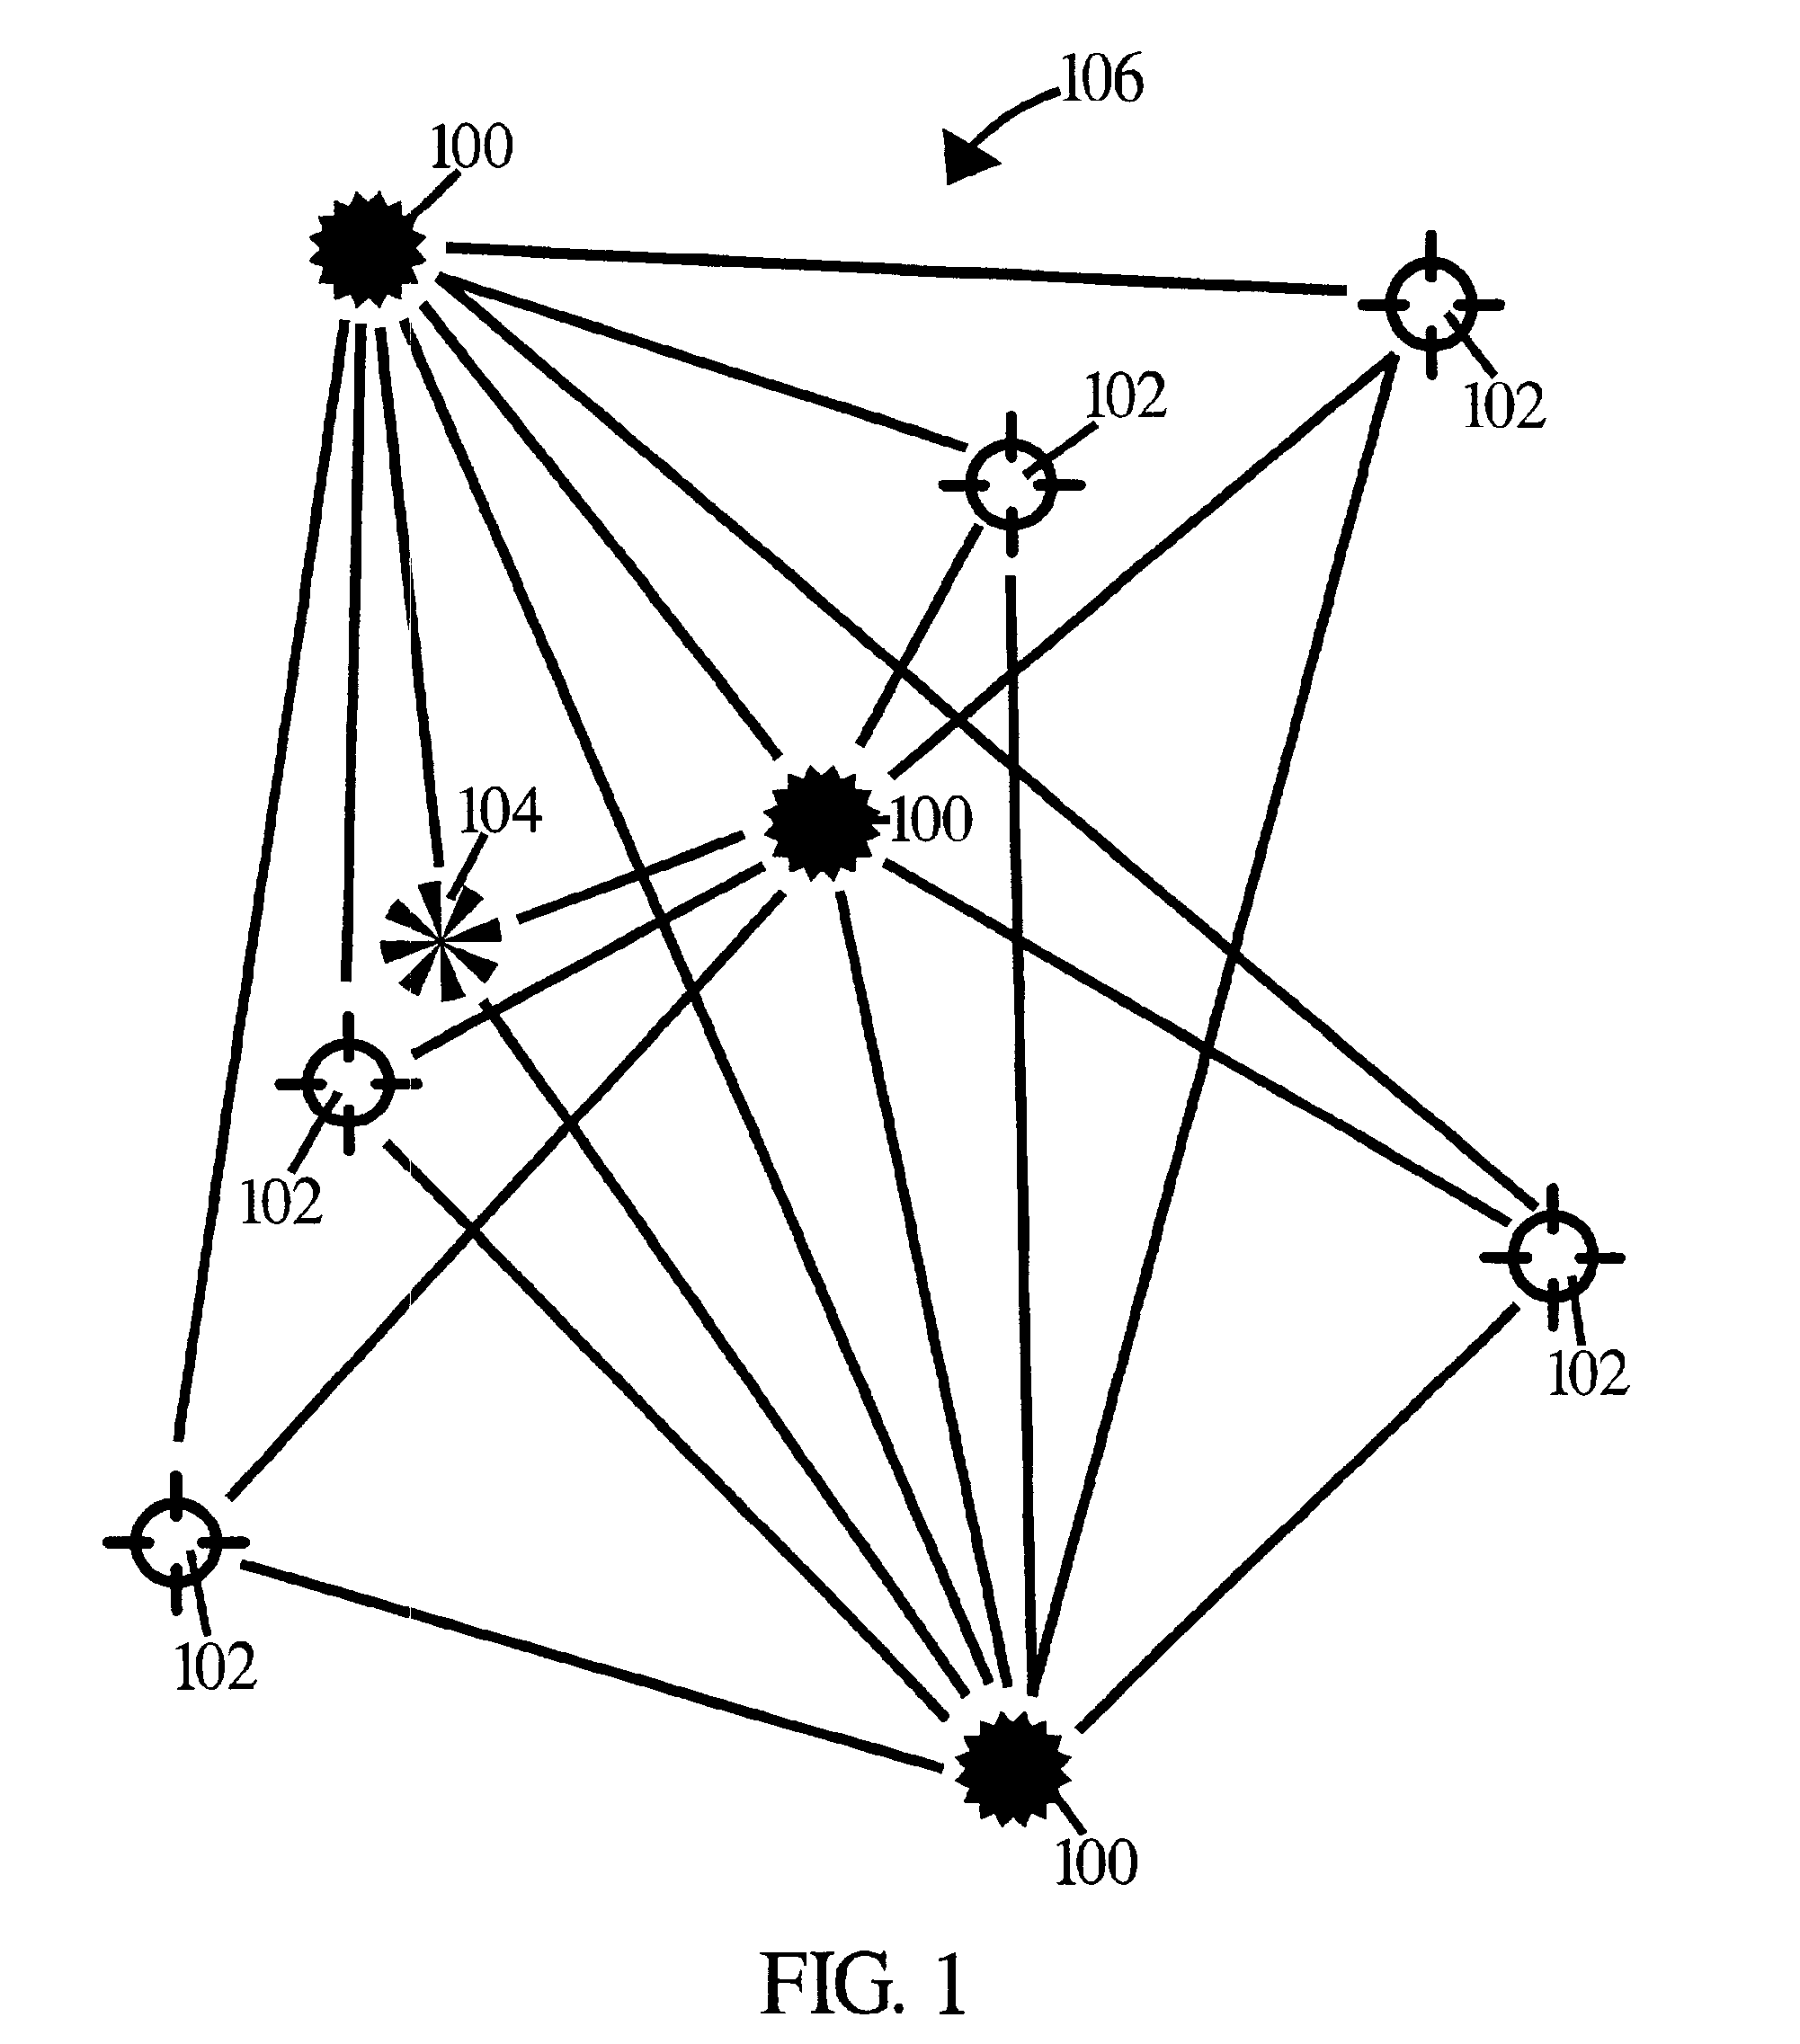 Method for geolocating logical network addresses